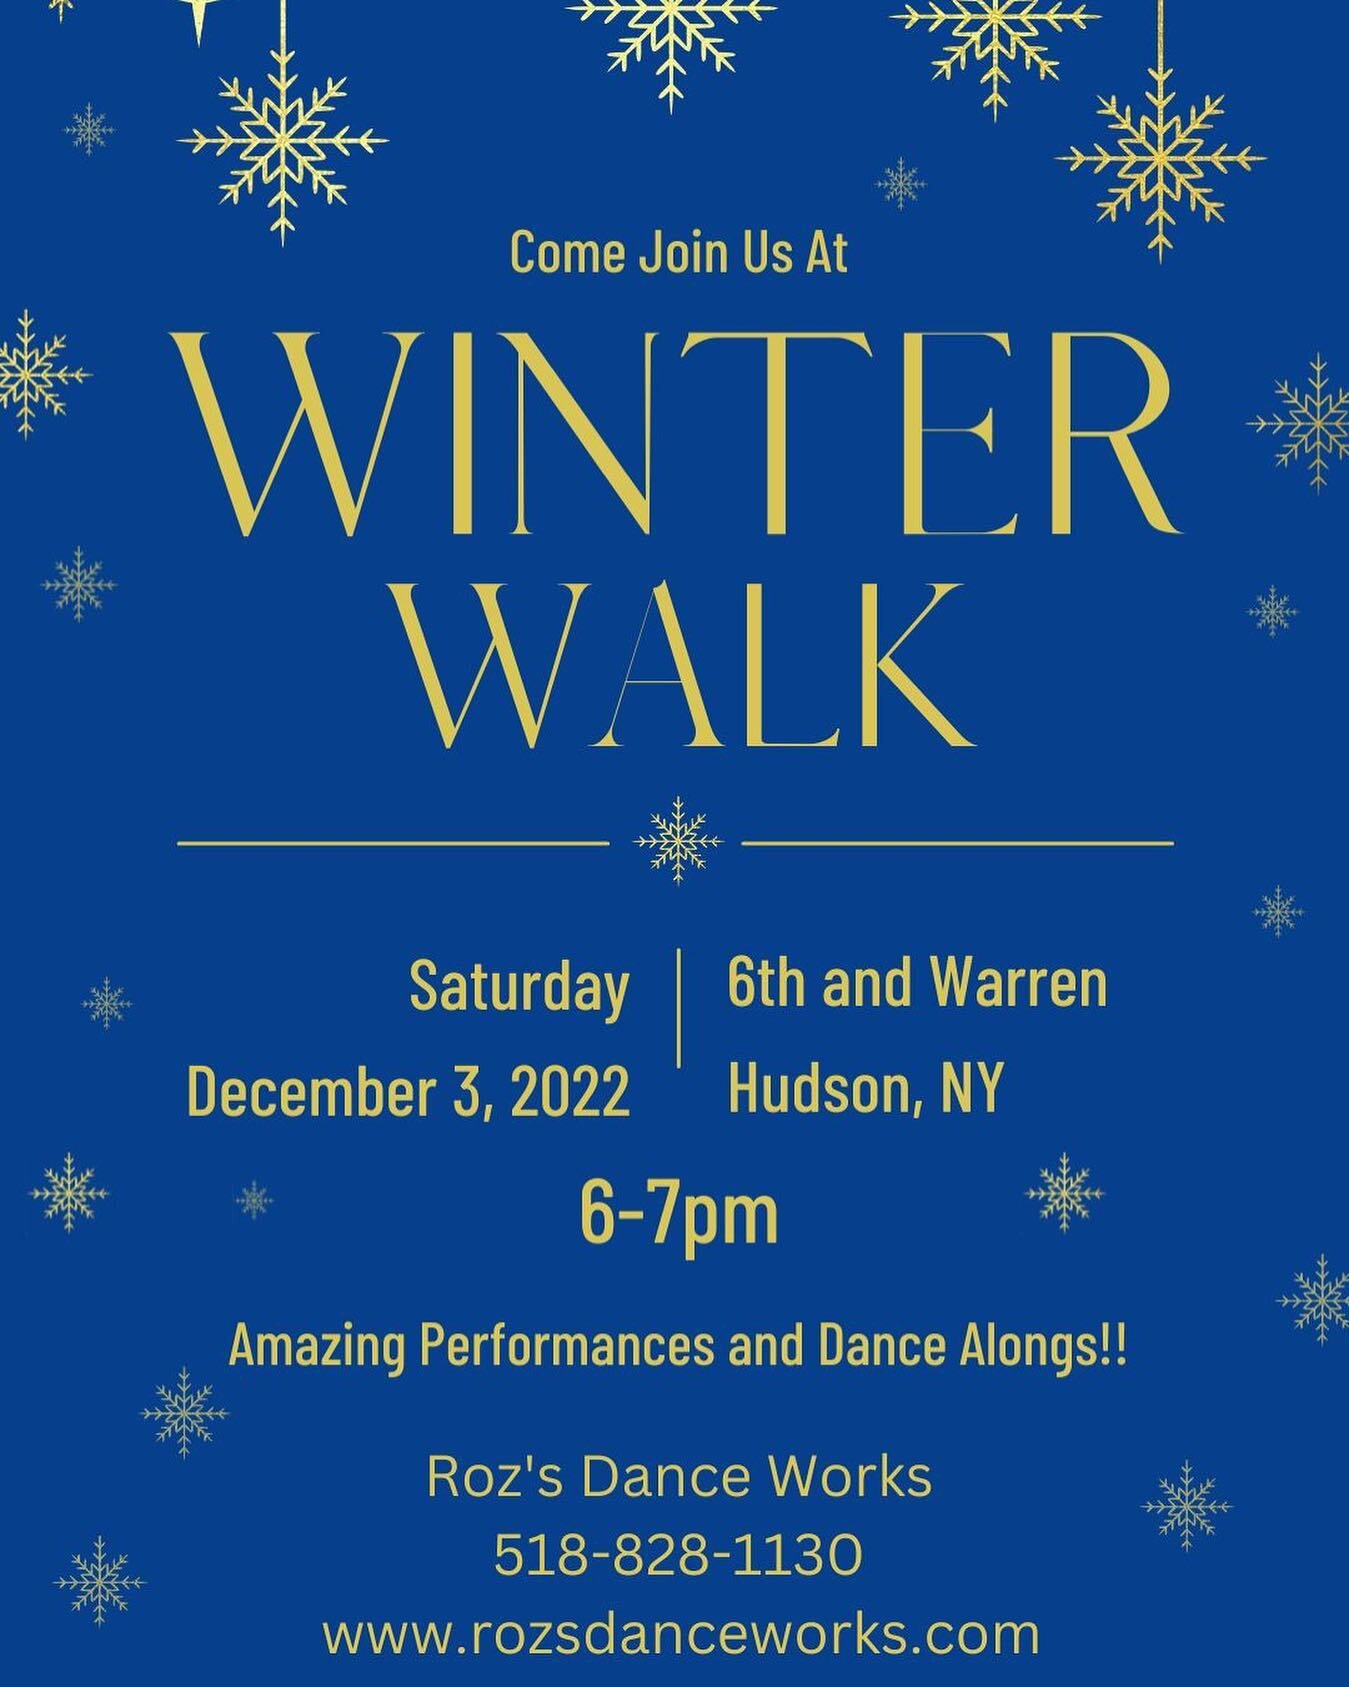 See you there!! 💙💛❄️

#hudsonny #winterwalk #dance